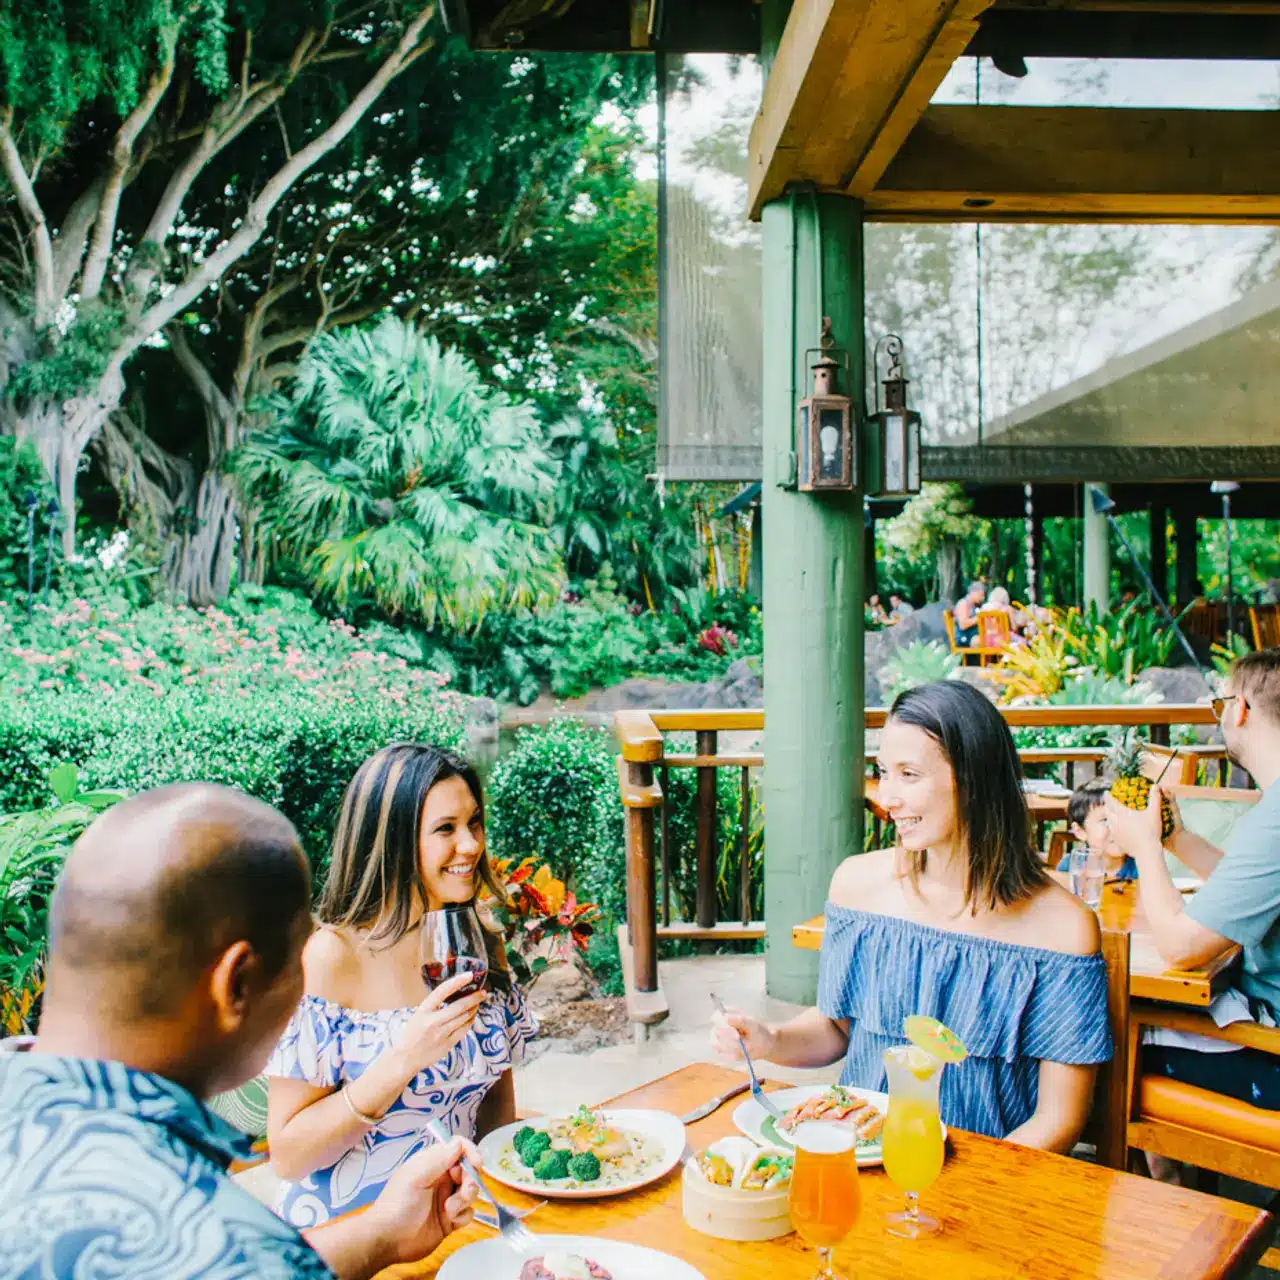 Keoki's Paradise is a Restaurant located in the city of Poipu on Kauai, Hawaii